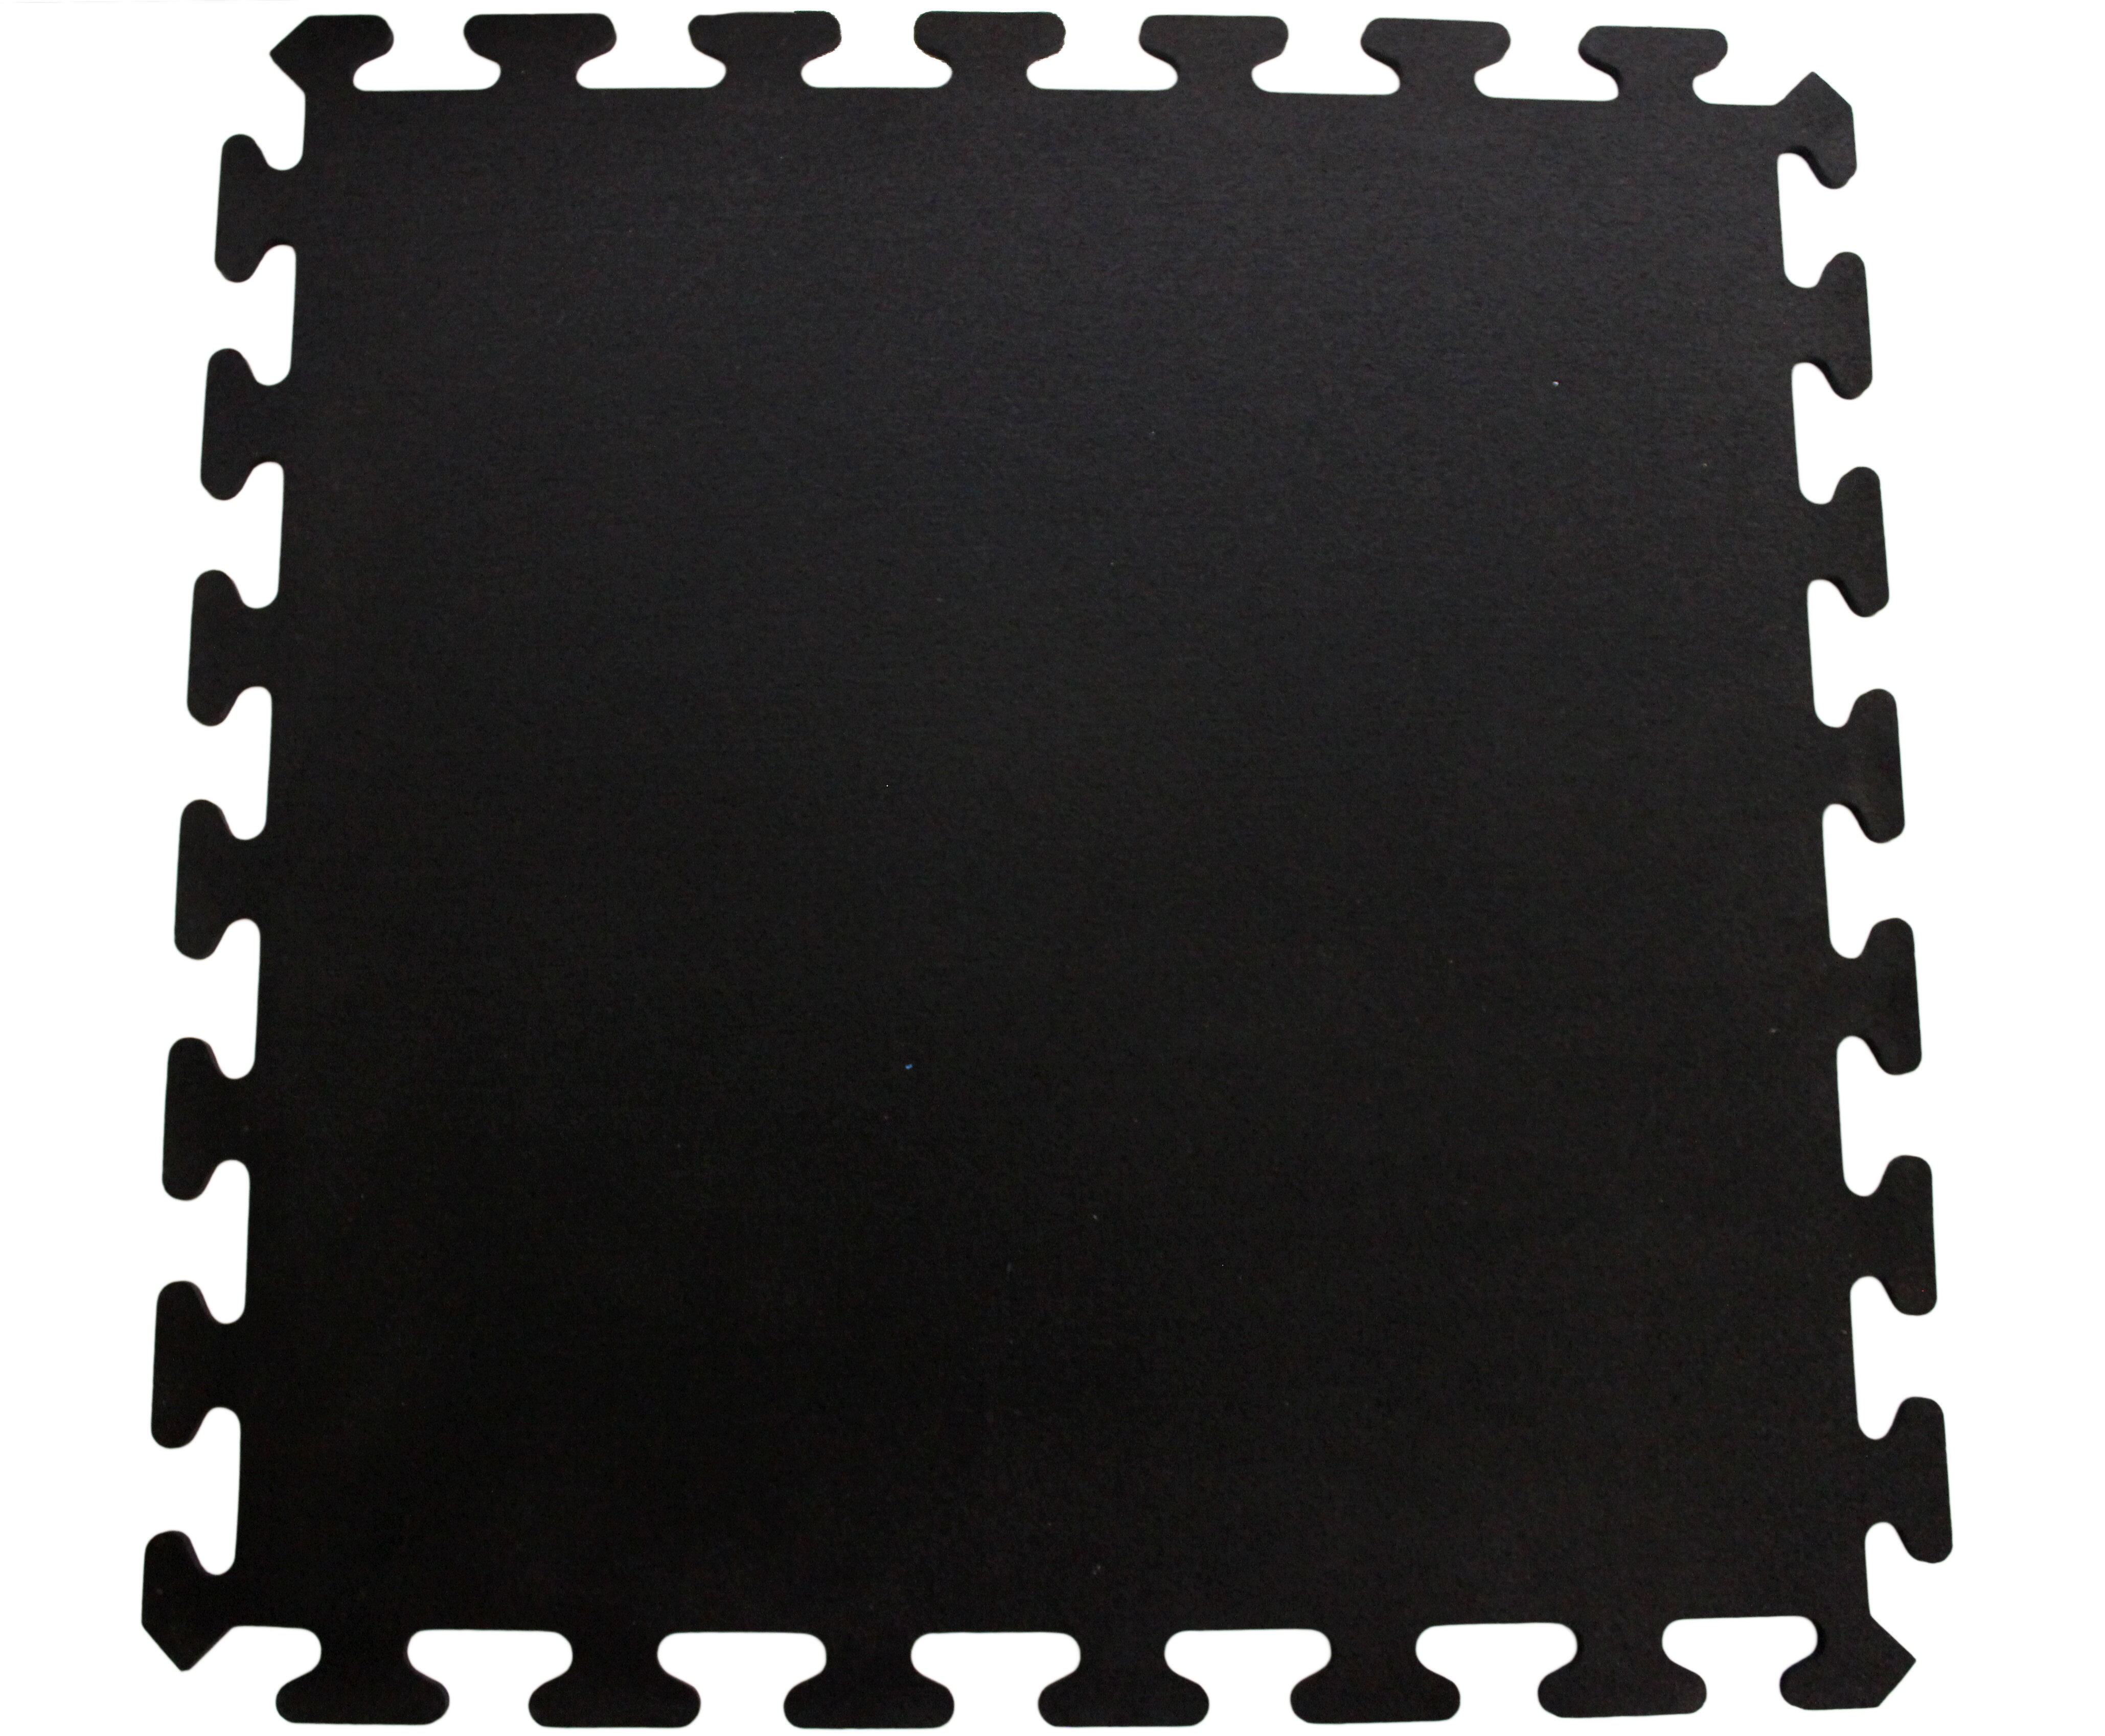 Interlocking Rubber Tile 10% Black Single Tile 23 x 23 American Floor Mats Sport 8mm Heavy Duty Rubber Flooring